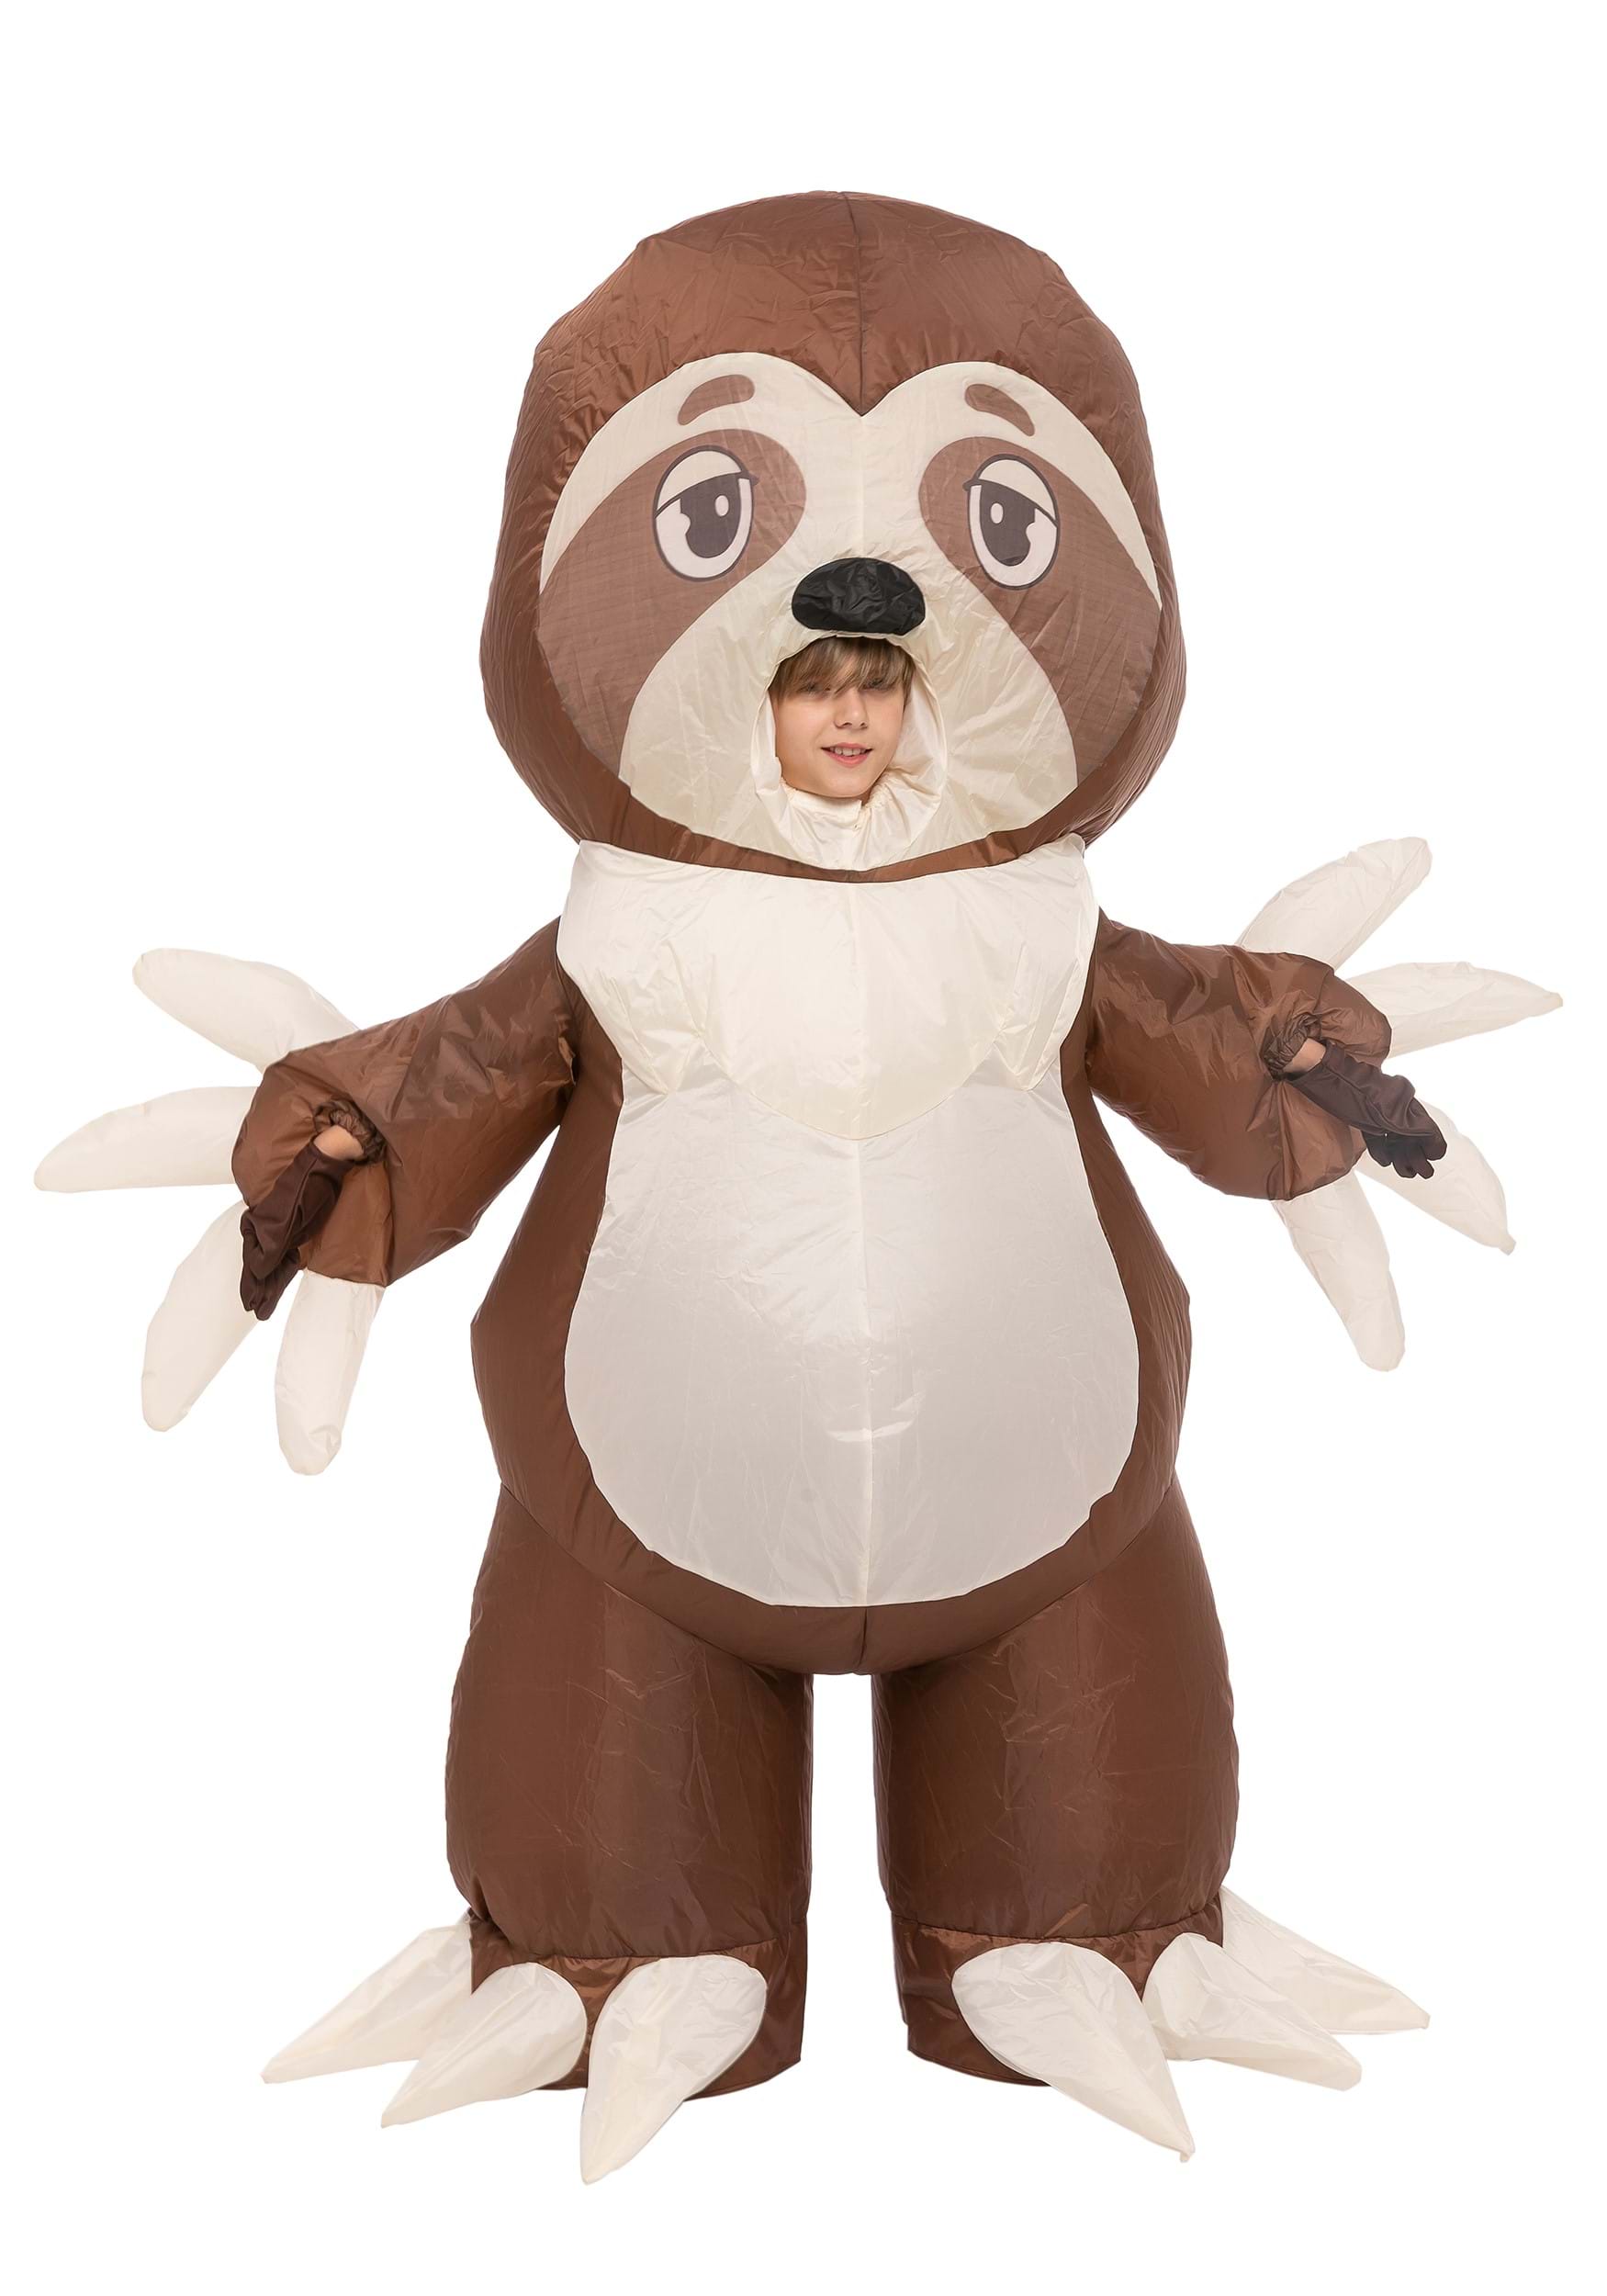 Kid’s Inflatable Sloth Costume